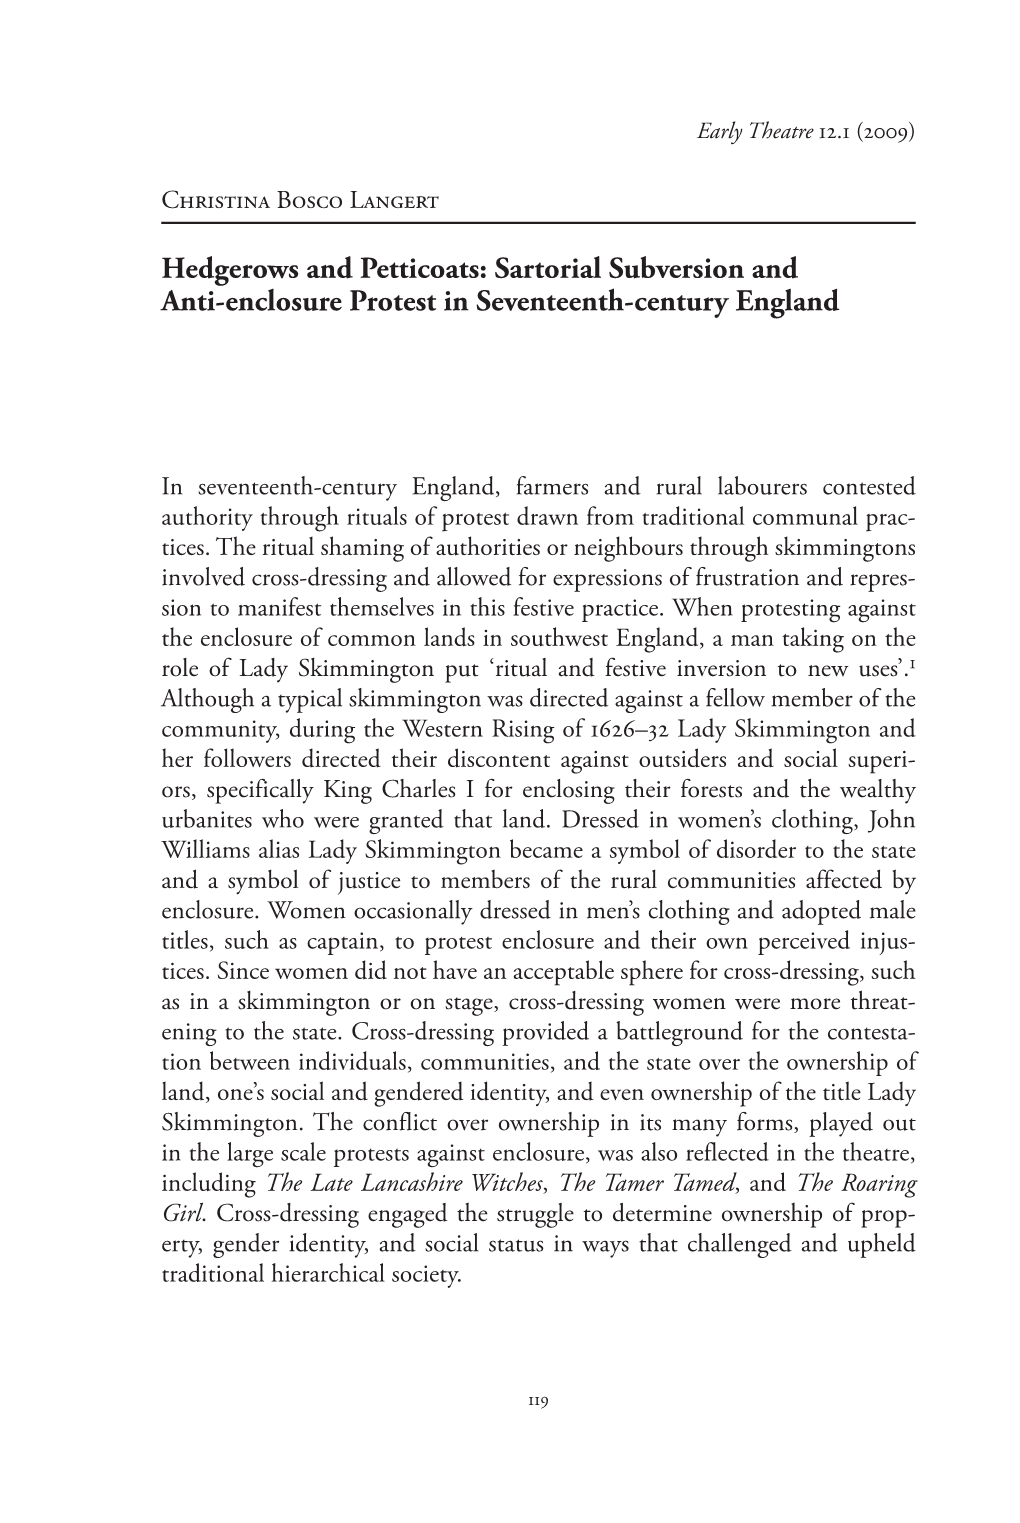 Sartorial Subversion and Anti-Enclosure Protest in Seventeenth-Century England